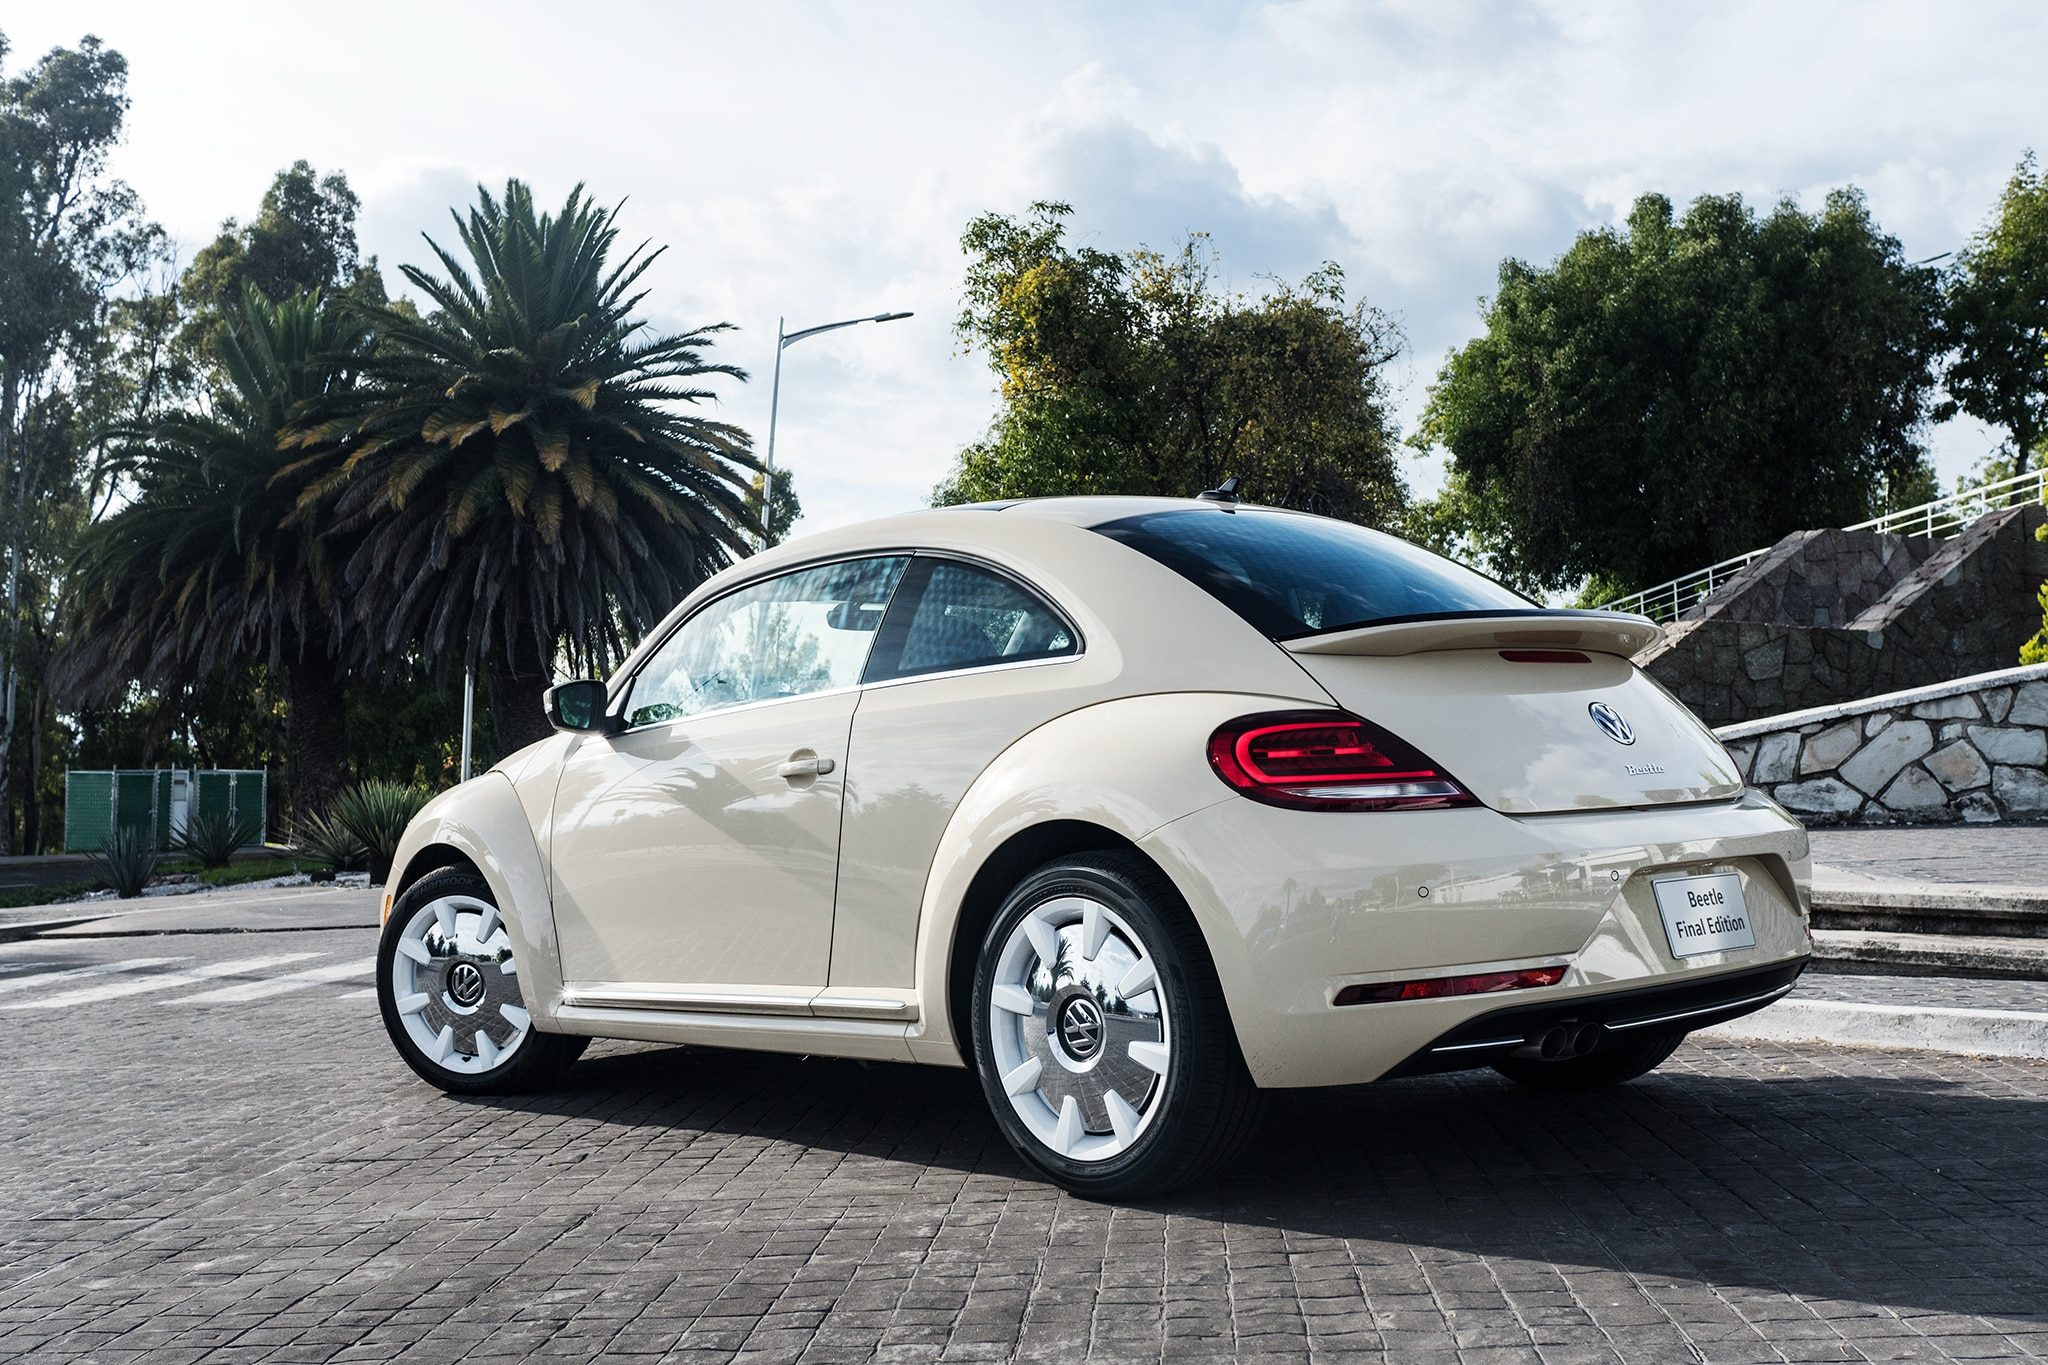 2019-Volkswagen-Beetle-Final-Edition-Dia-de-Muertos-in-Mexico-82.jpg